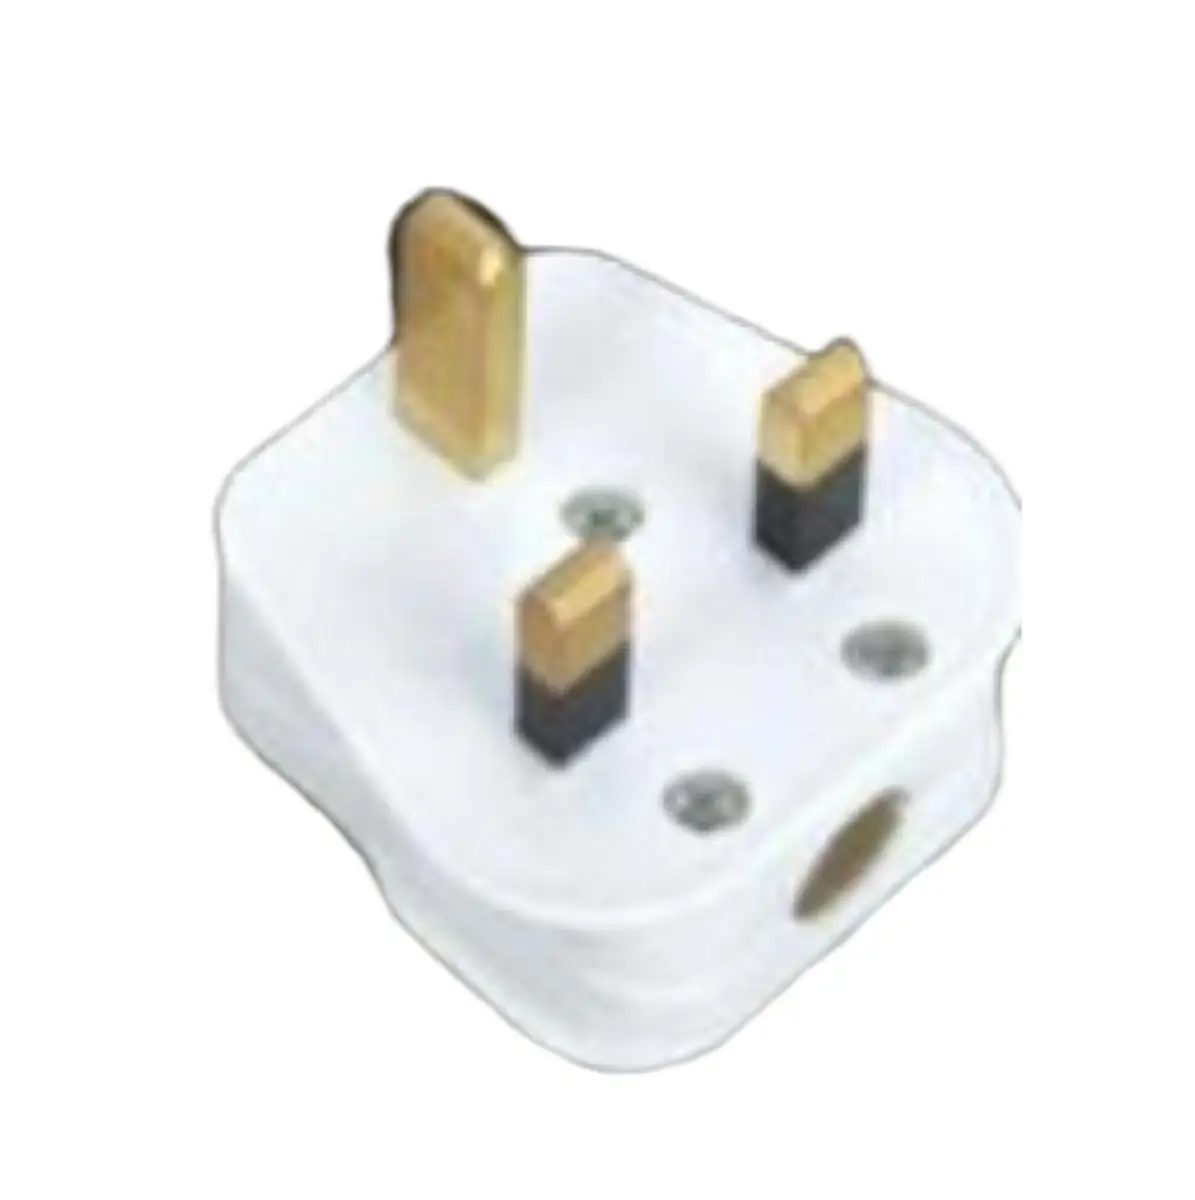 UK 3 pin electric plug 13A power plug with fuse